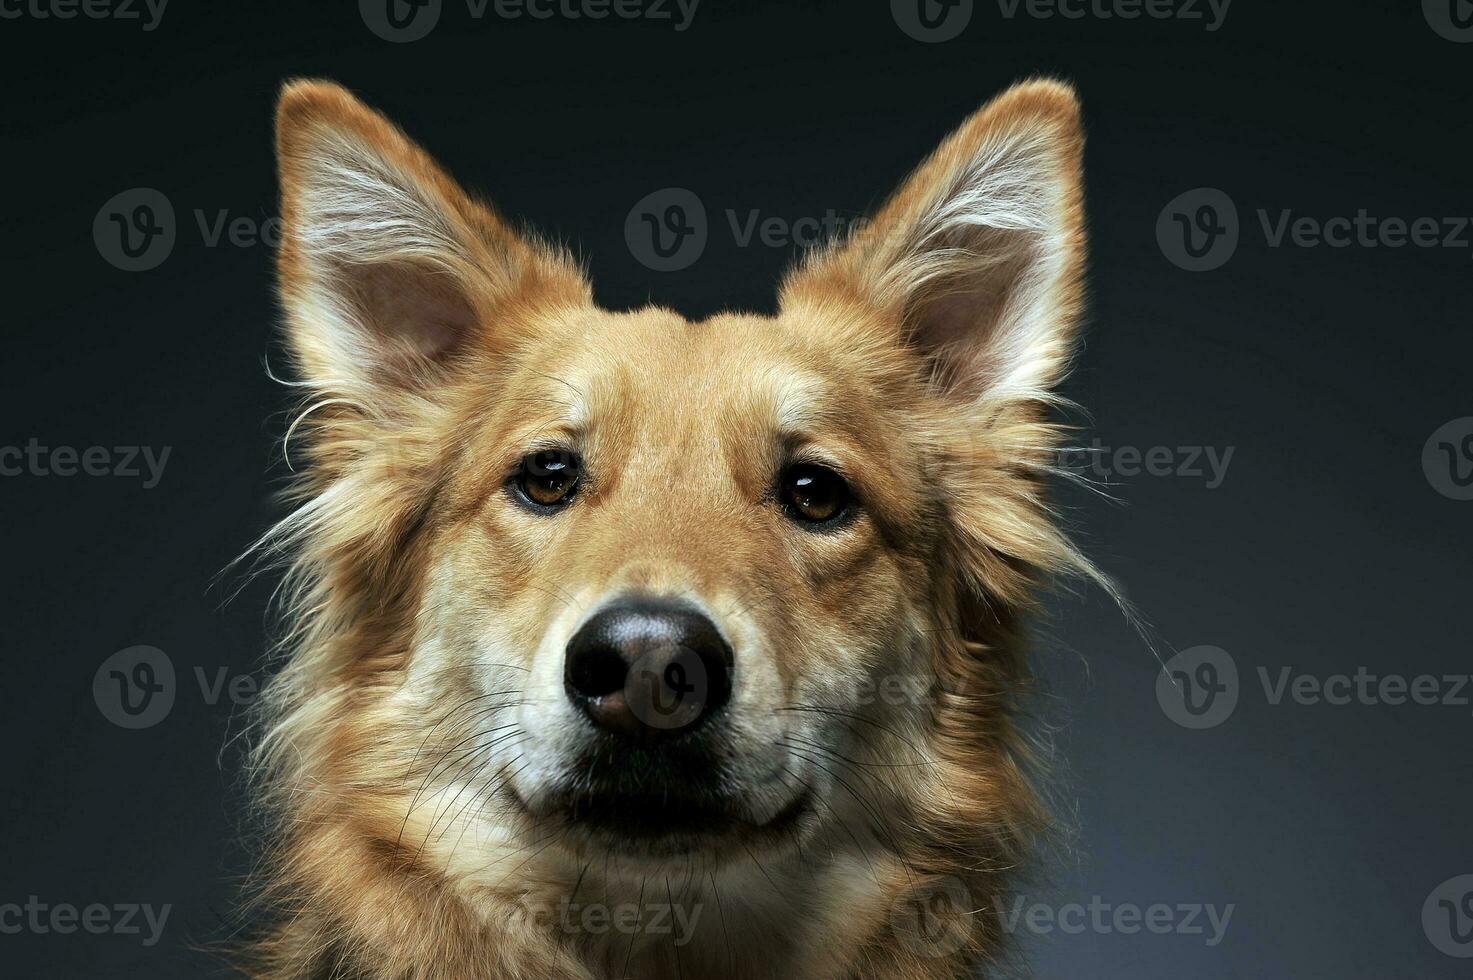 cute mixed breed dog portrait in dark studio photo